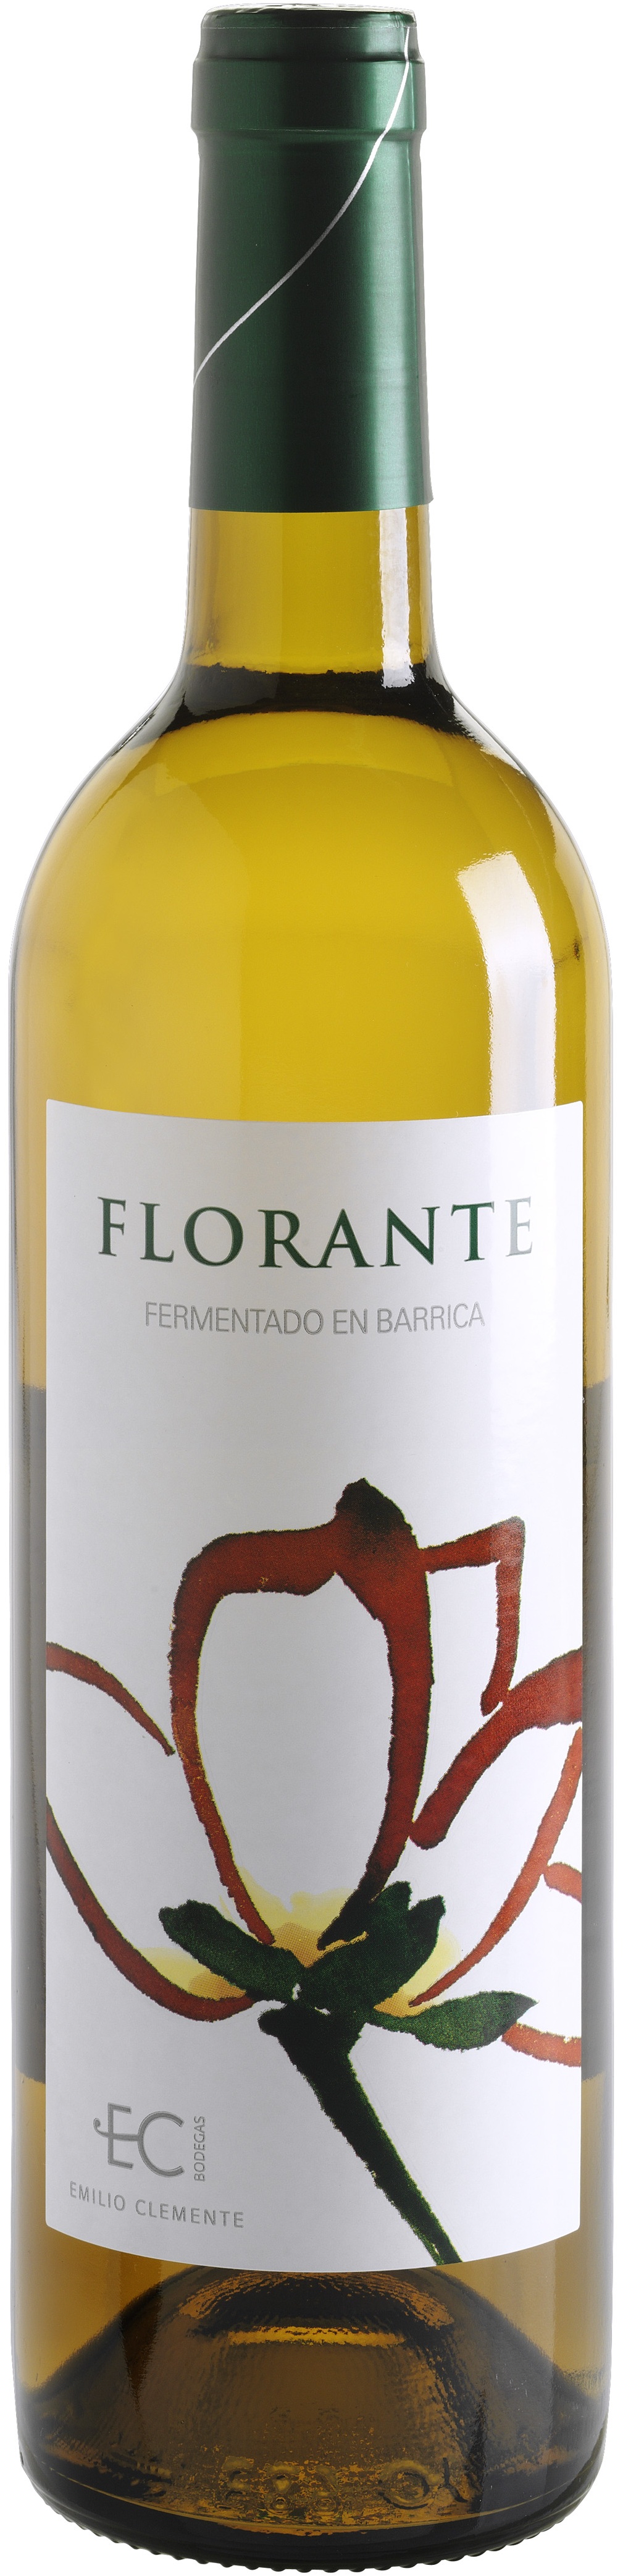 Imagen de la botella de Vino Florante Fermentado